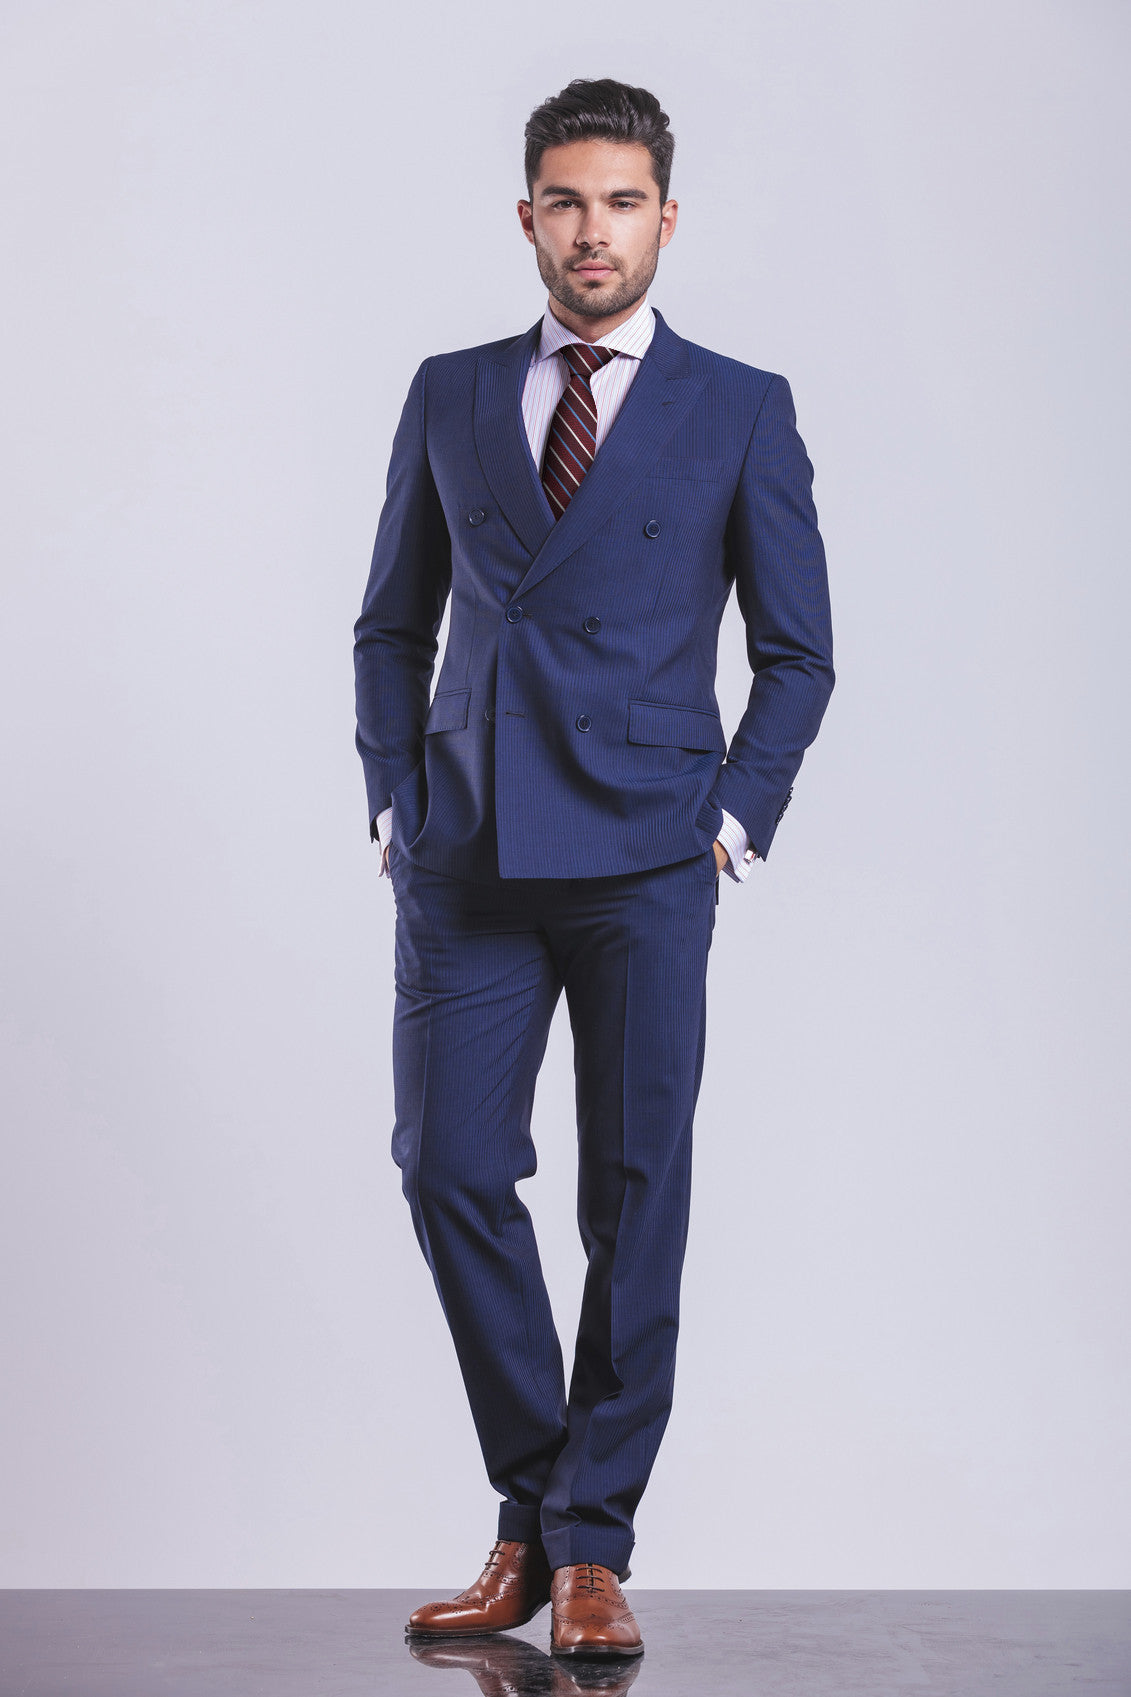 Men's Ties | Pop Fashion Men's Ties Classic Formal Wear Suit Woven Silk ...